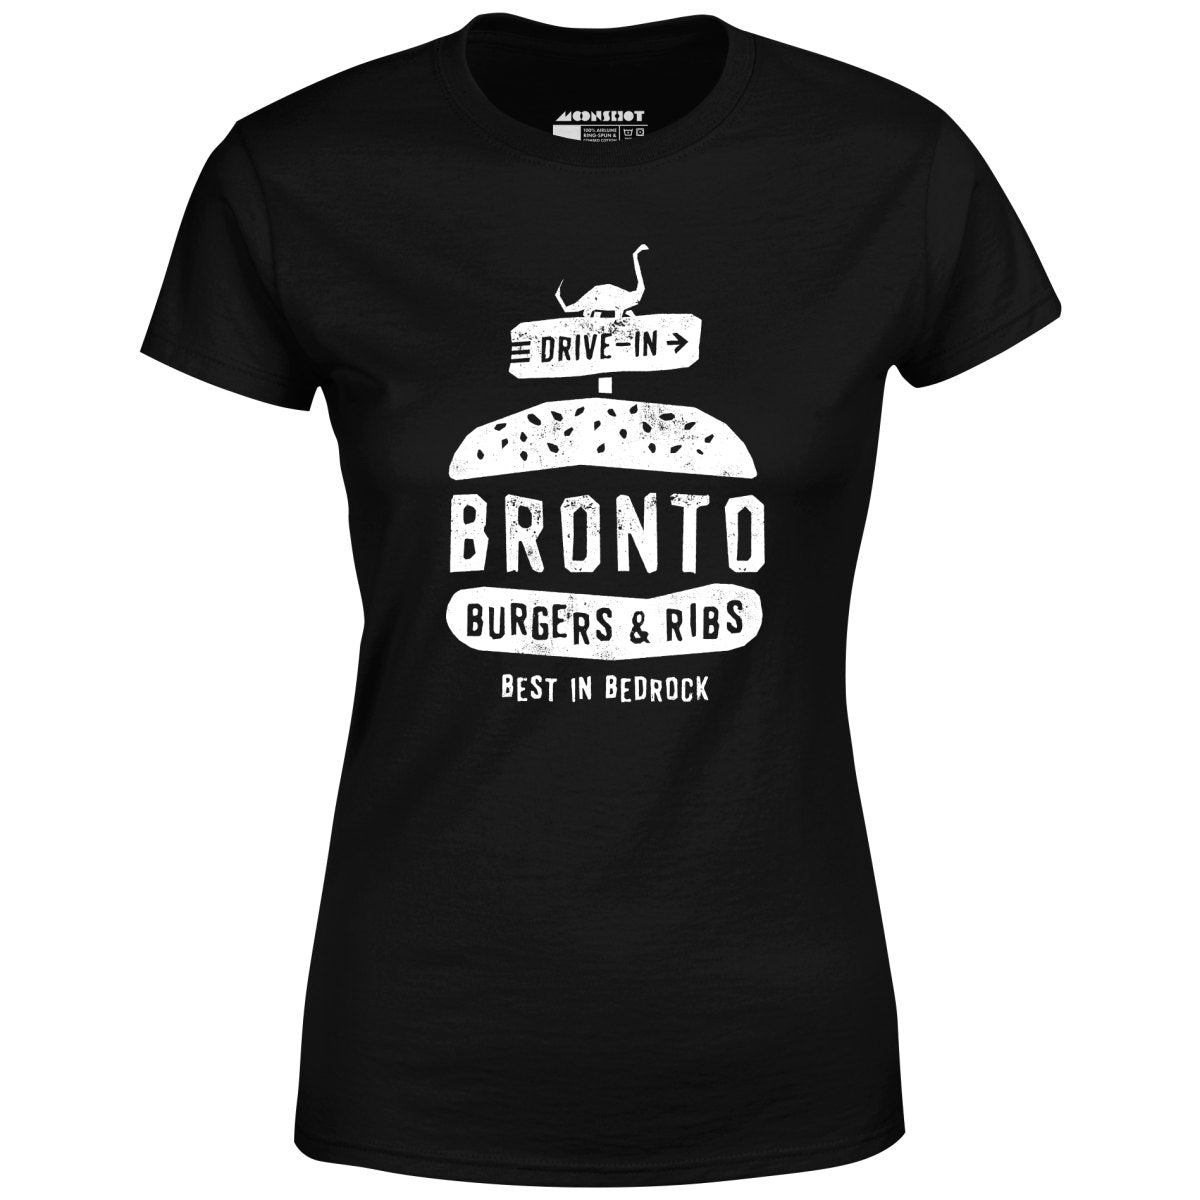 Bronto Burgers & Ribs - Women's T-Shirt